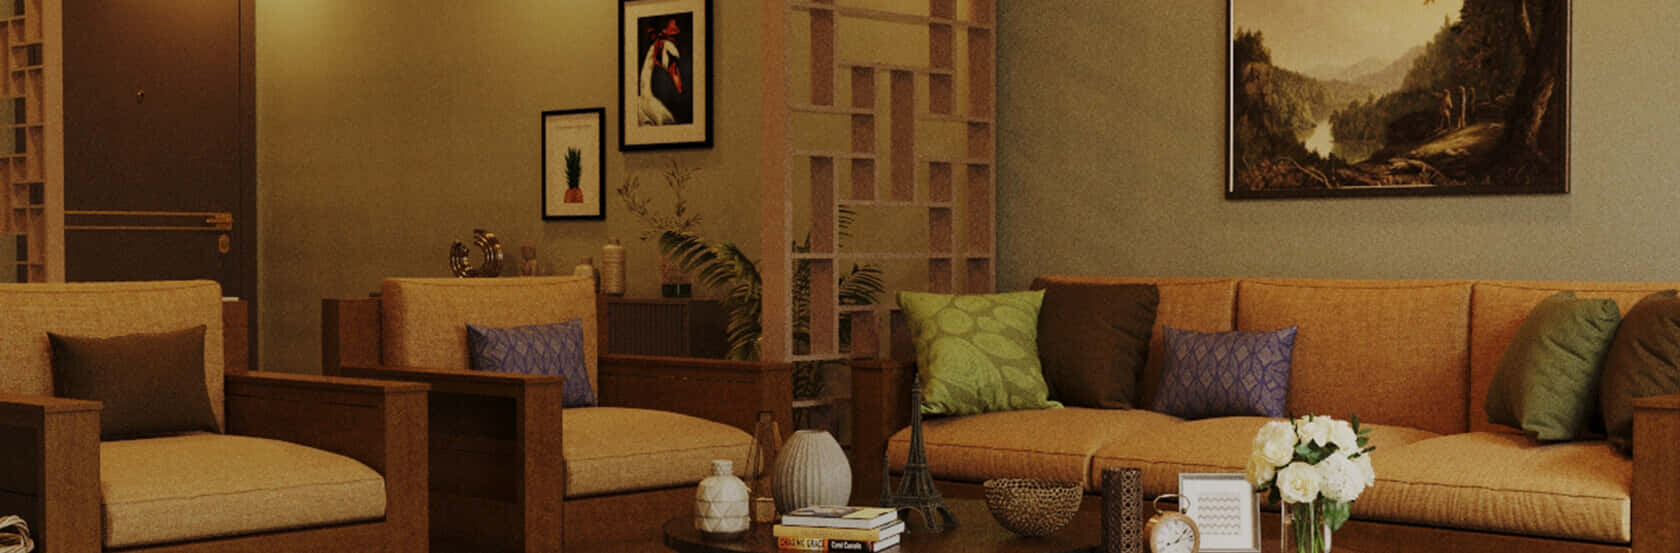 Home Interior Romantic Rustic Living Room Picture